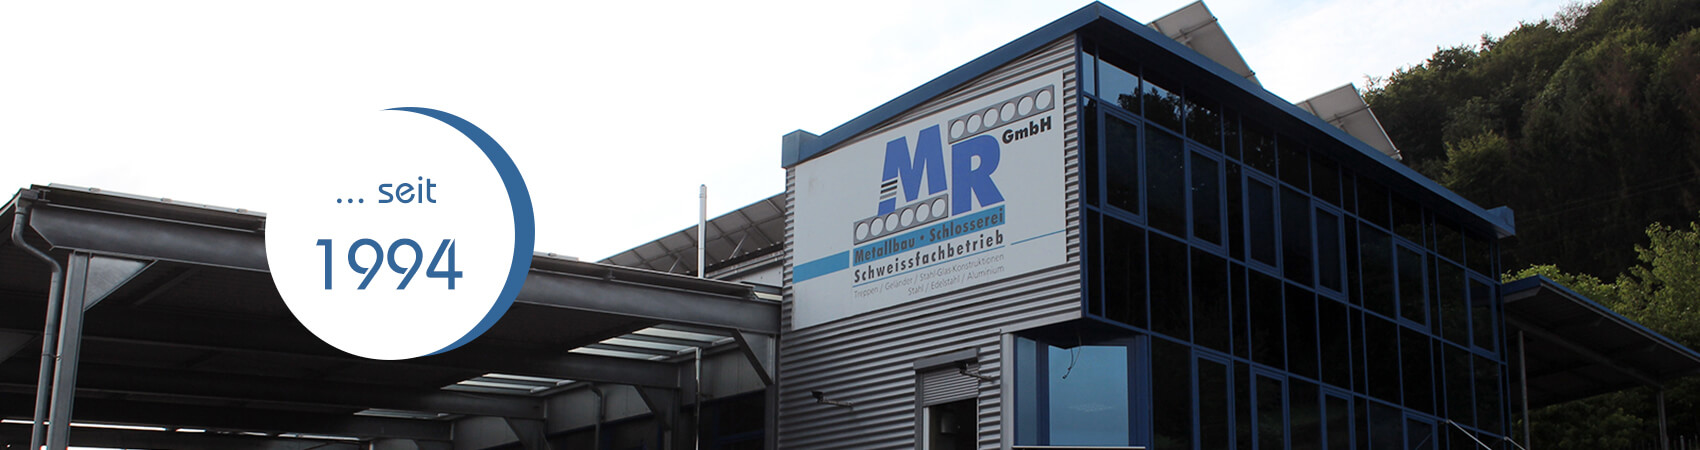 M.R. Metallbau GmbH seit 1994